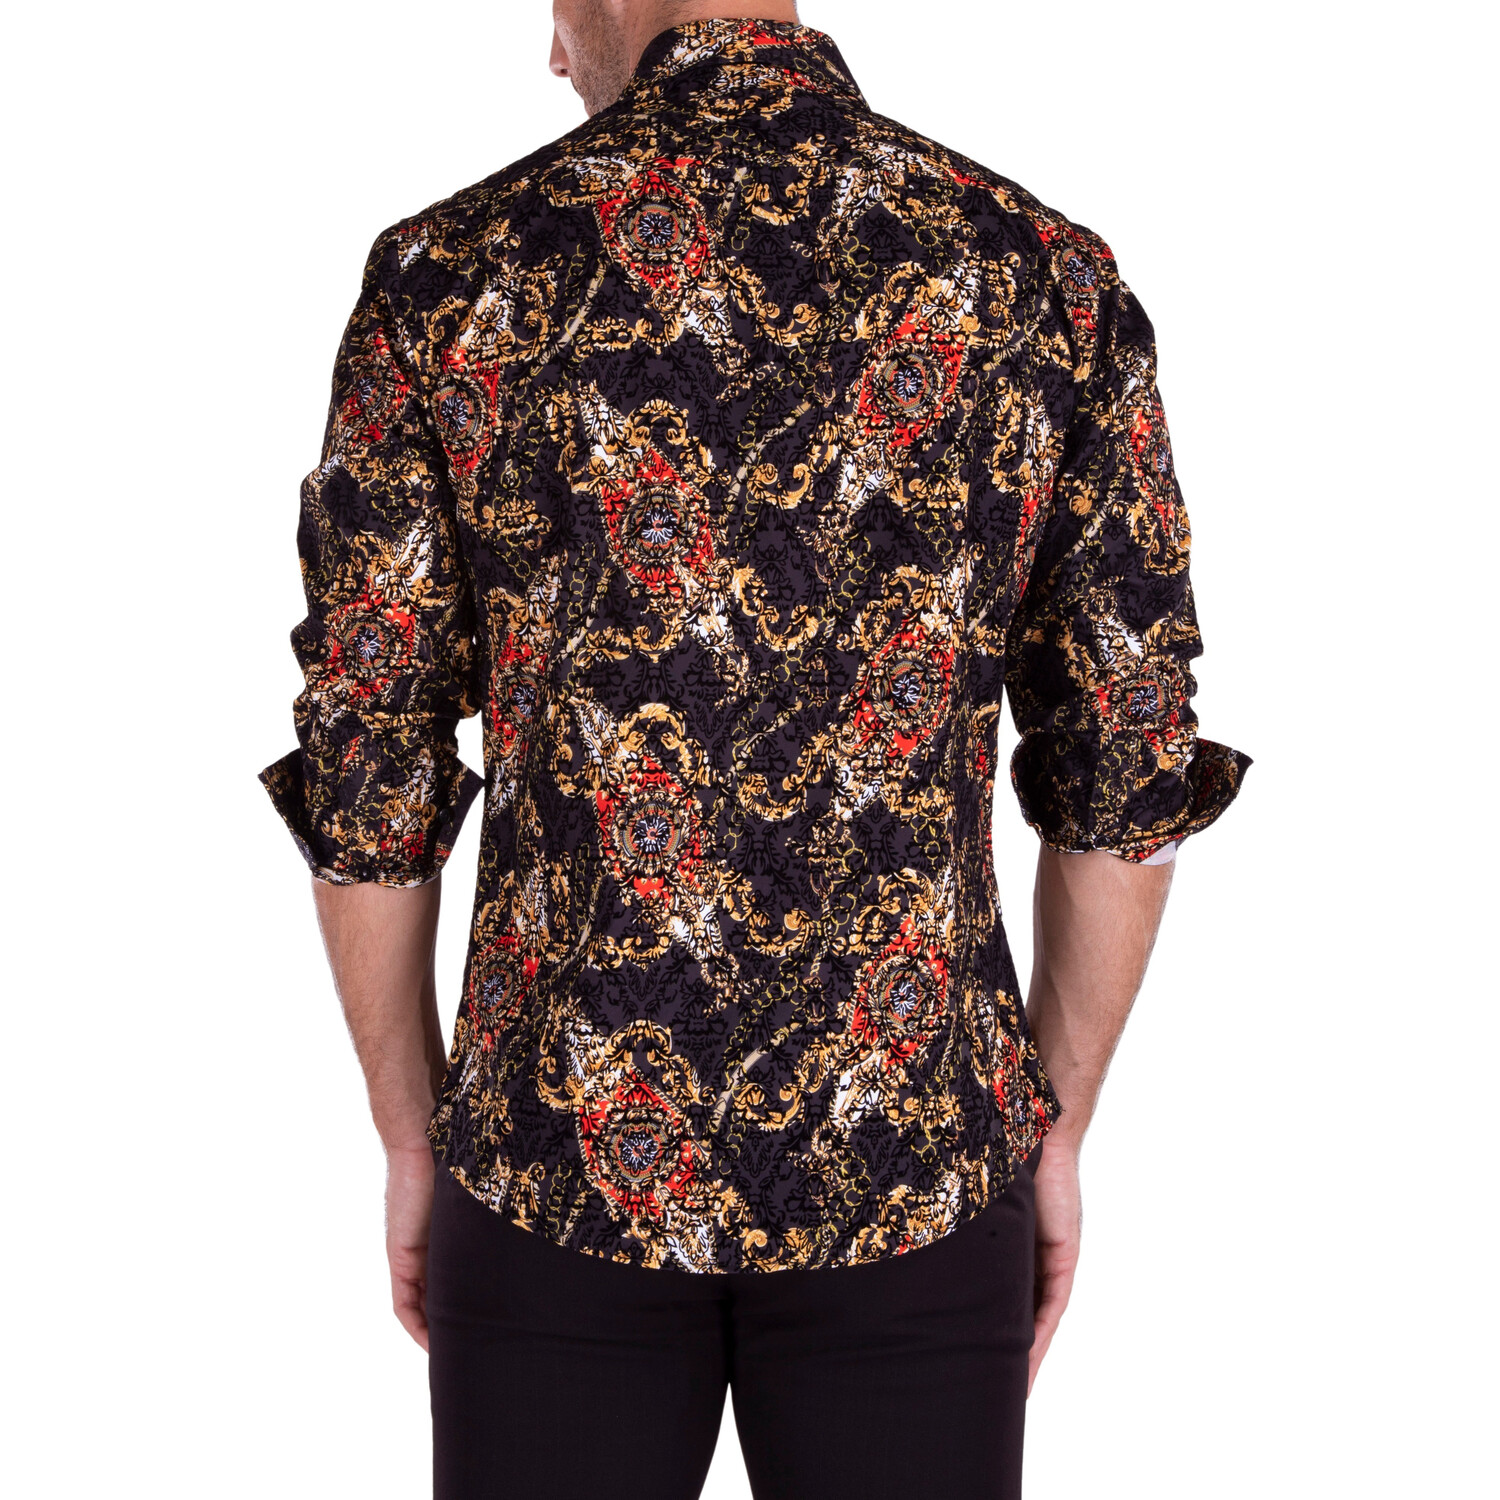 Mixed Baroque Style + Velvet Texture Long Sleeve Button-Up Shirt ...